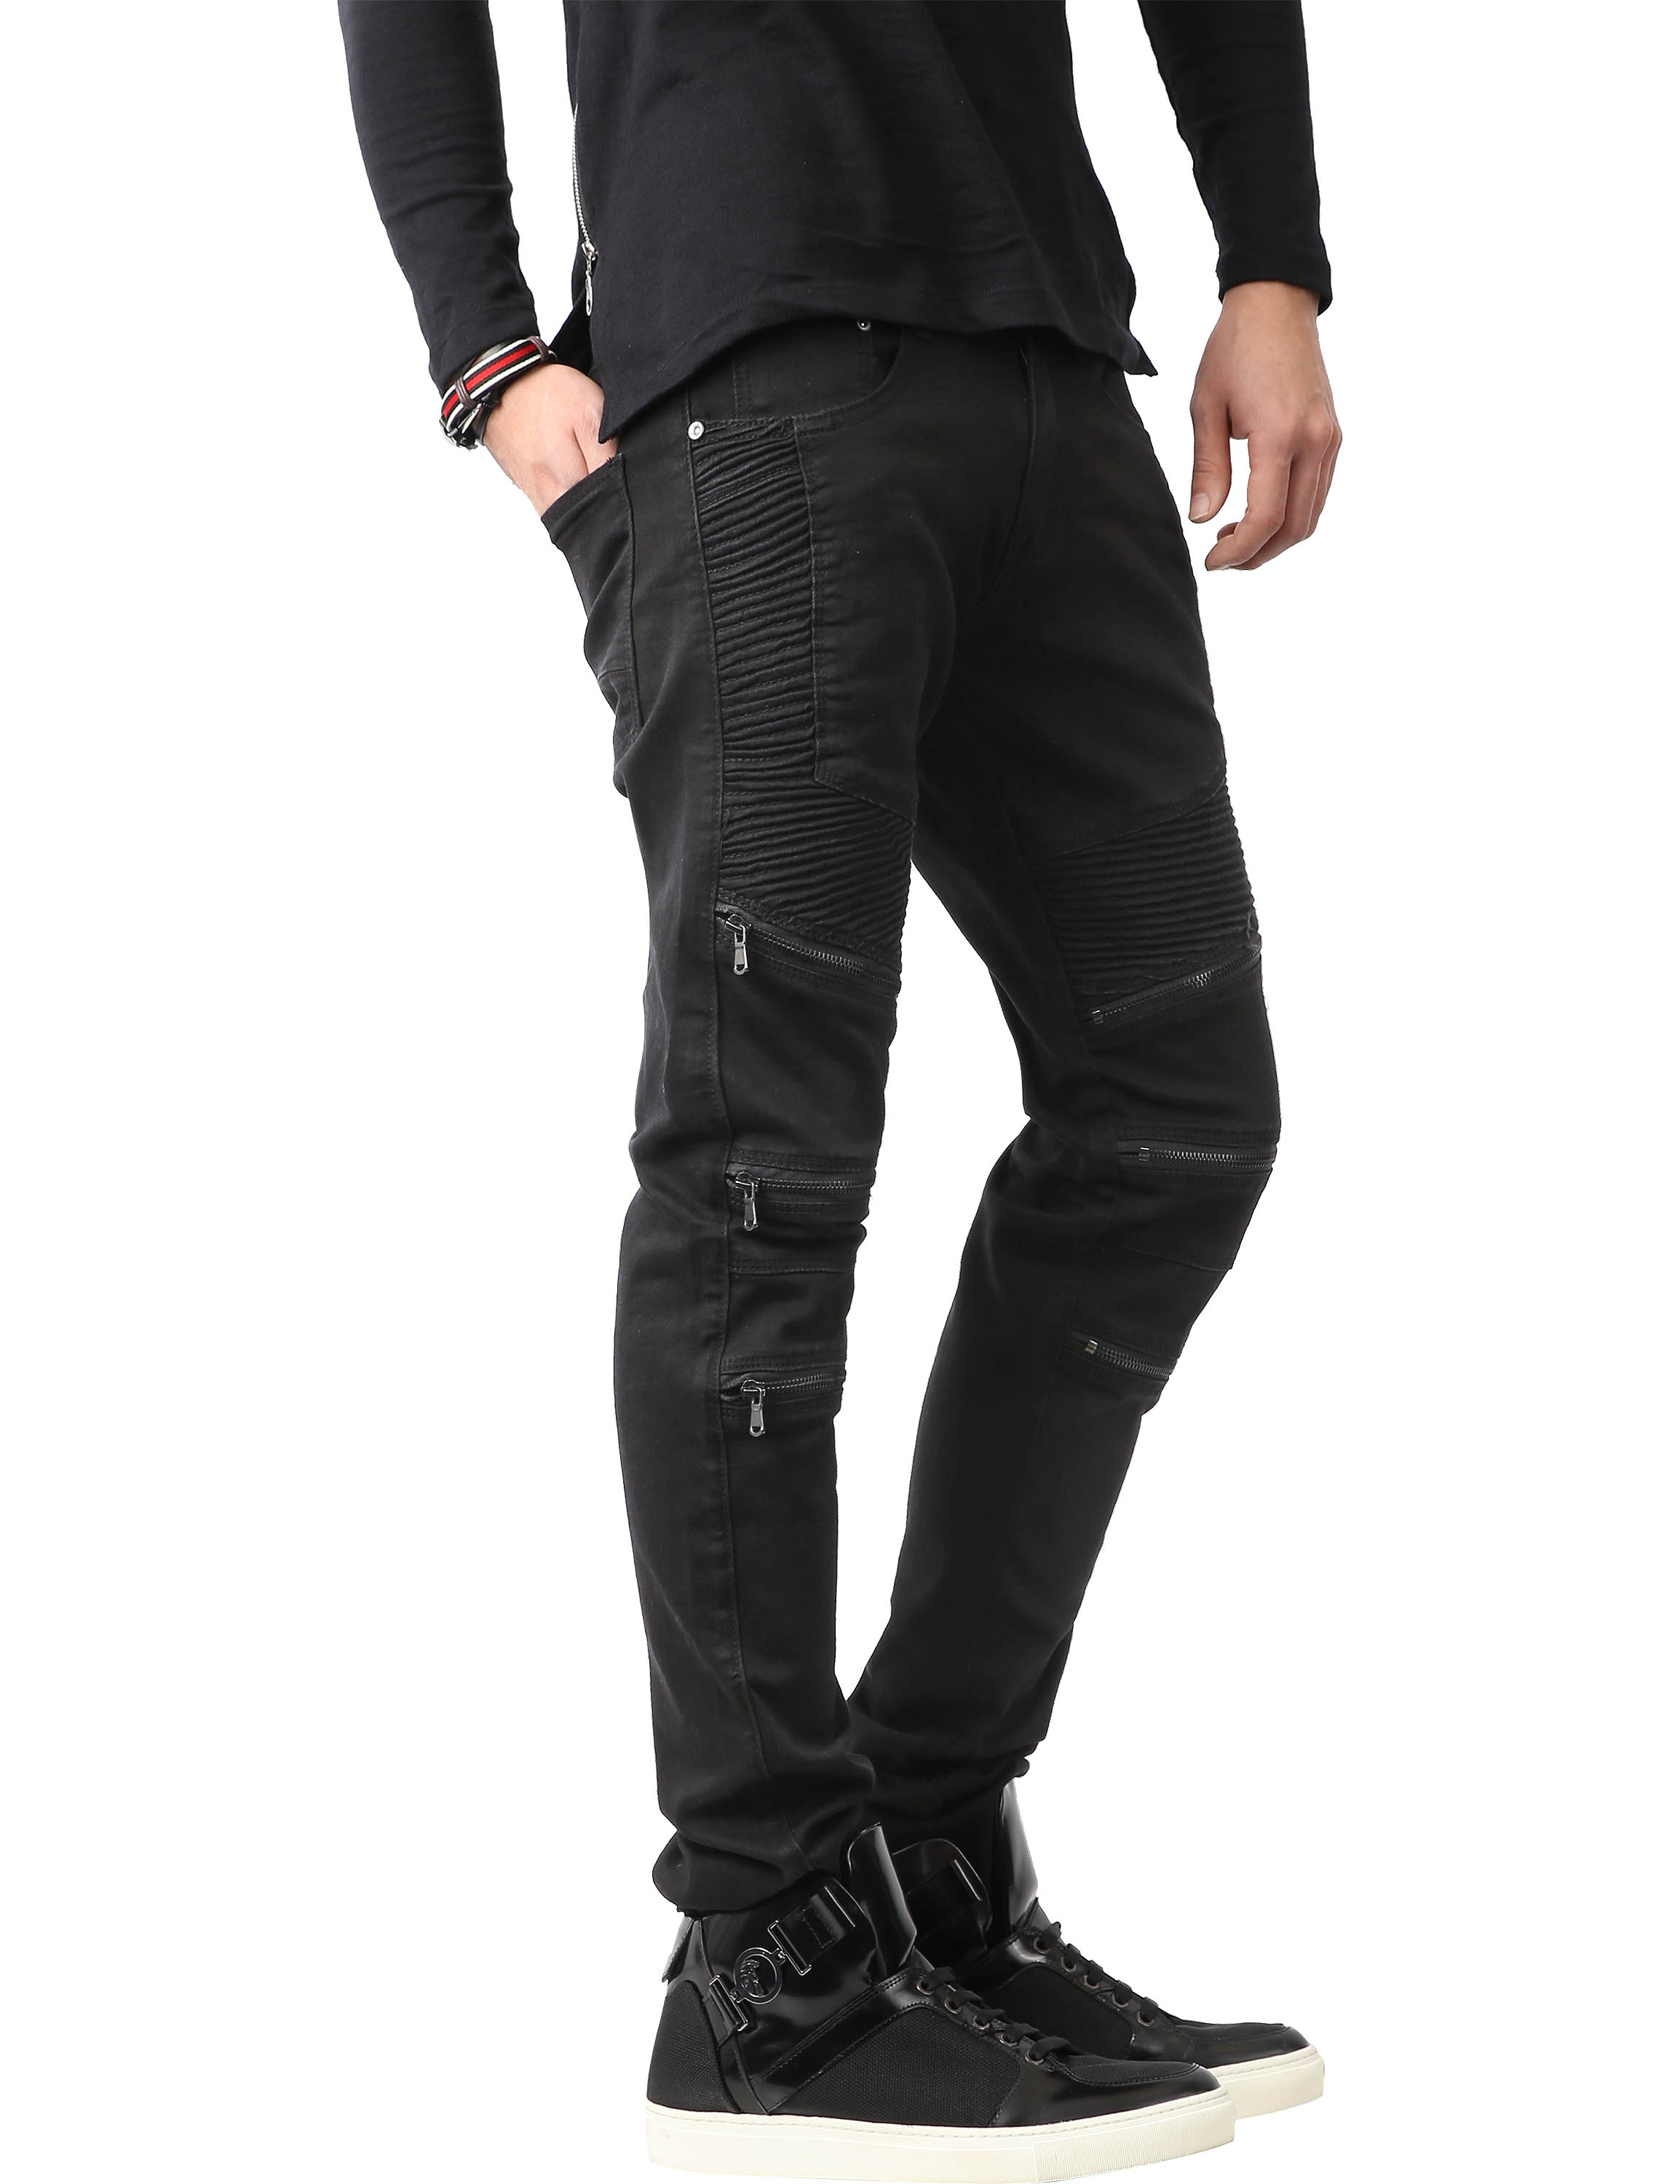 Ma Croix Mens Biker Jeans Slim Fit Distressed Ripped Zipper Stretch Denim Pants - image 3 of 6